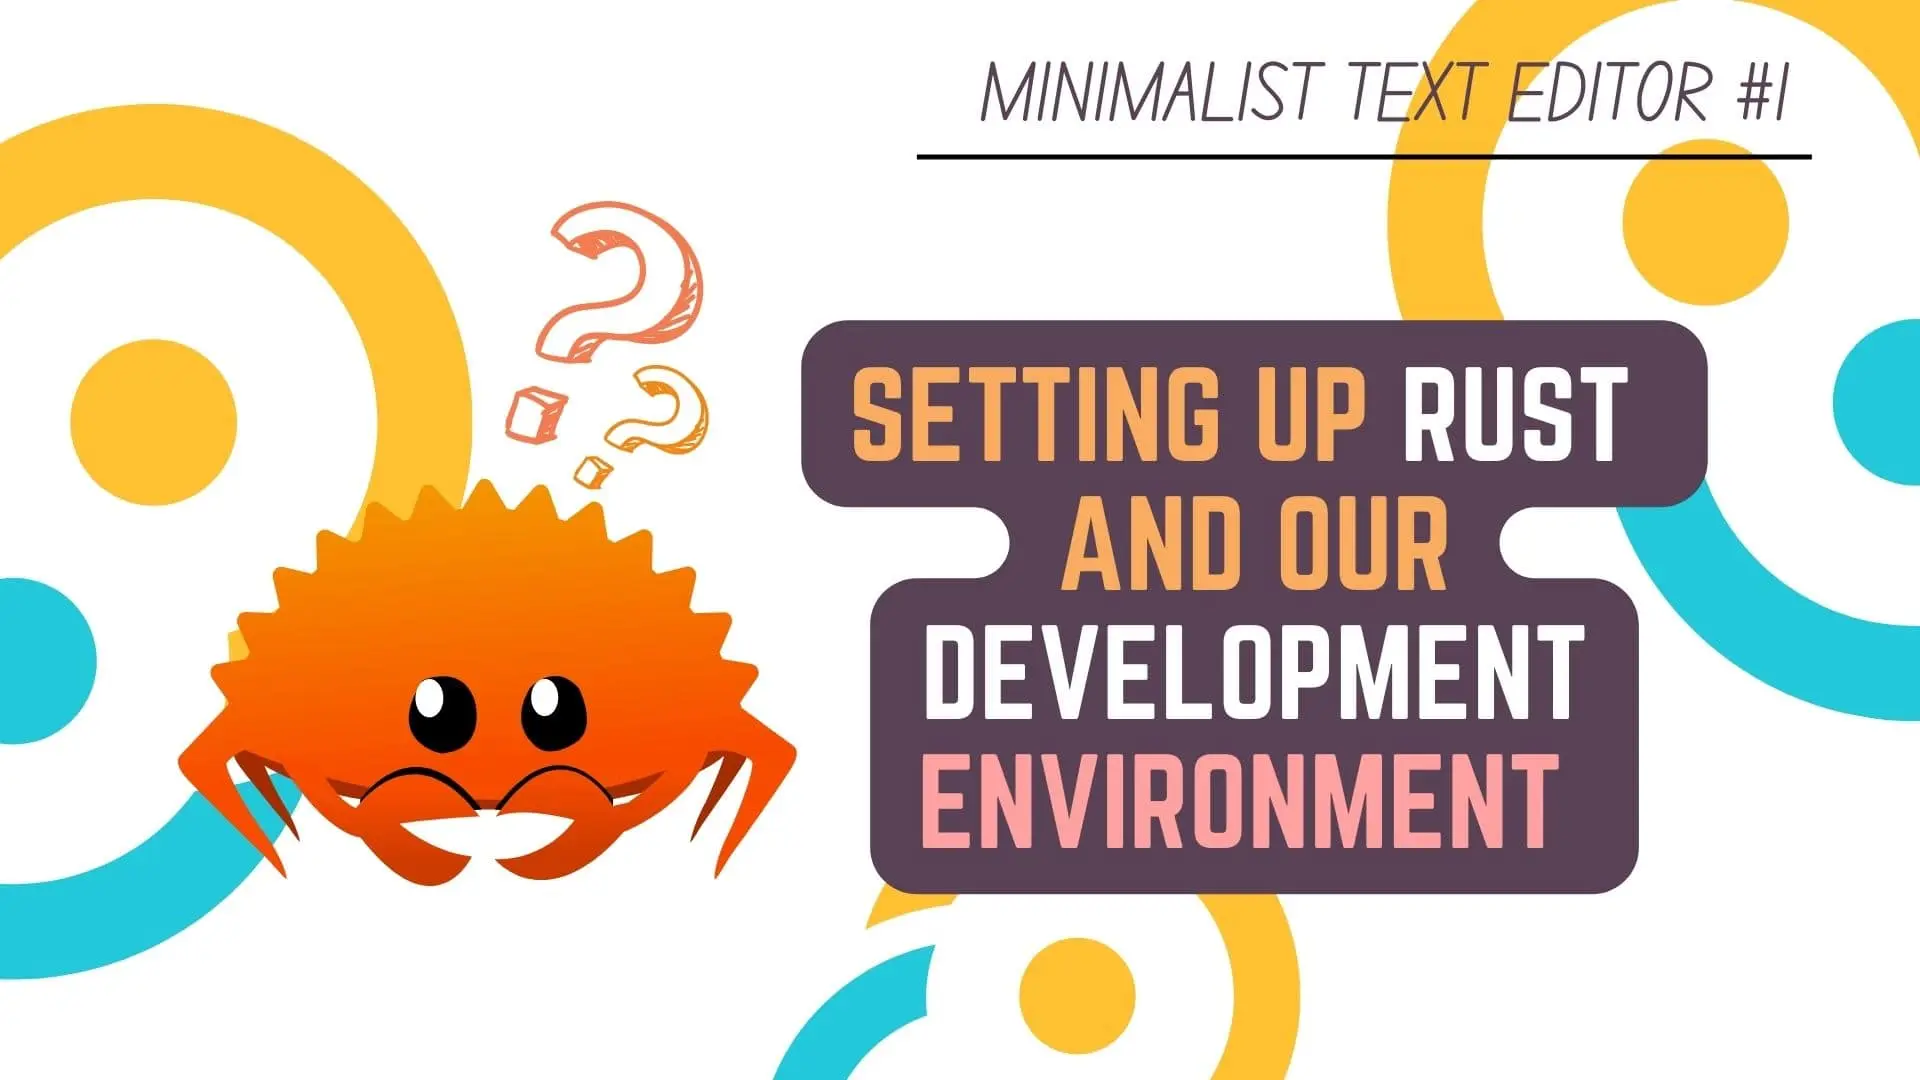 Minimalist Text Editor in Rust Programming Language & Tauri - #1 Setting Up The Development Environment - Rust & Tauri Tutorial - Featured Image